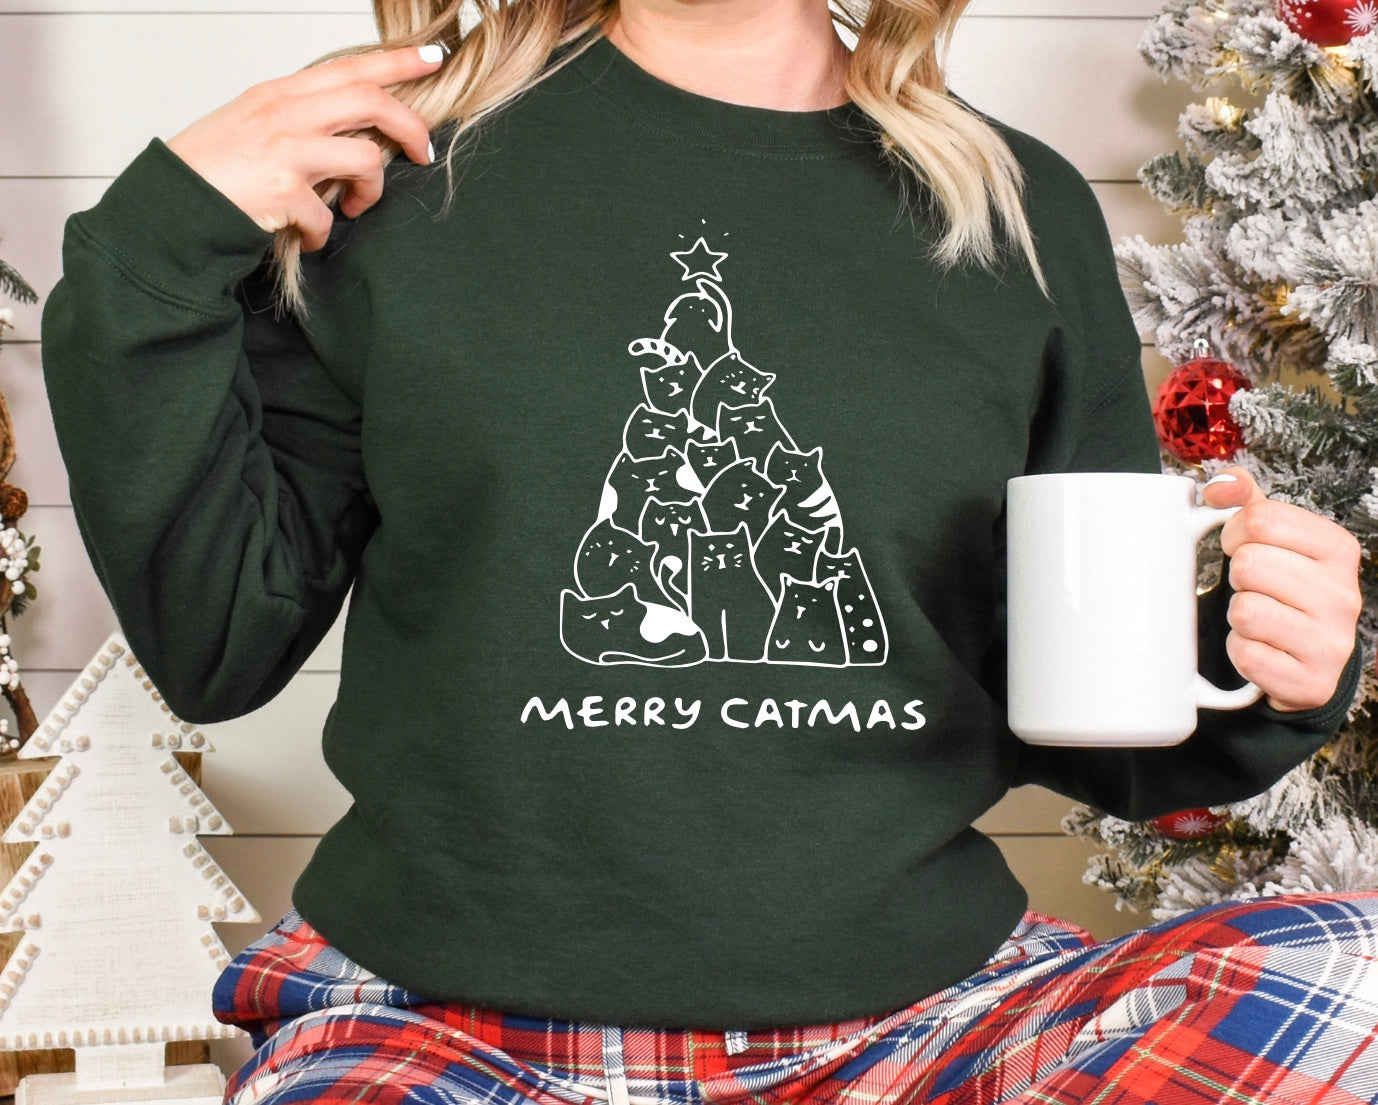 Merry Catmas unisex crewneck sweatshirt in green with white graphic